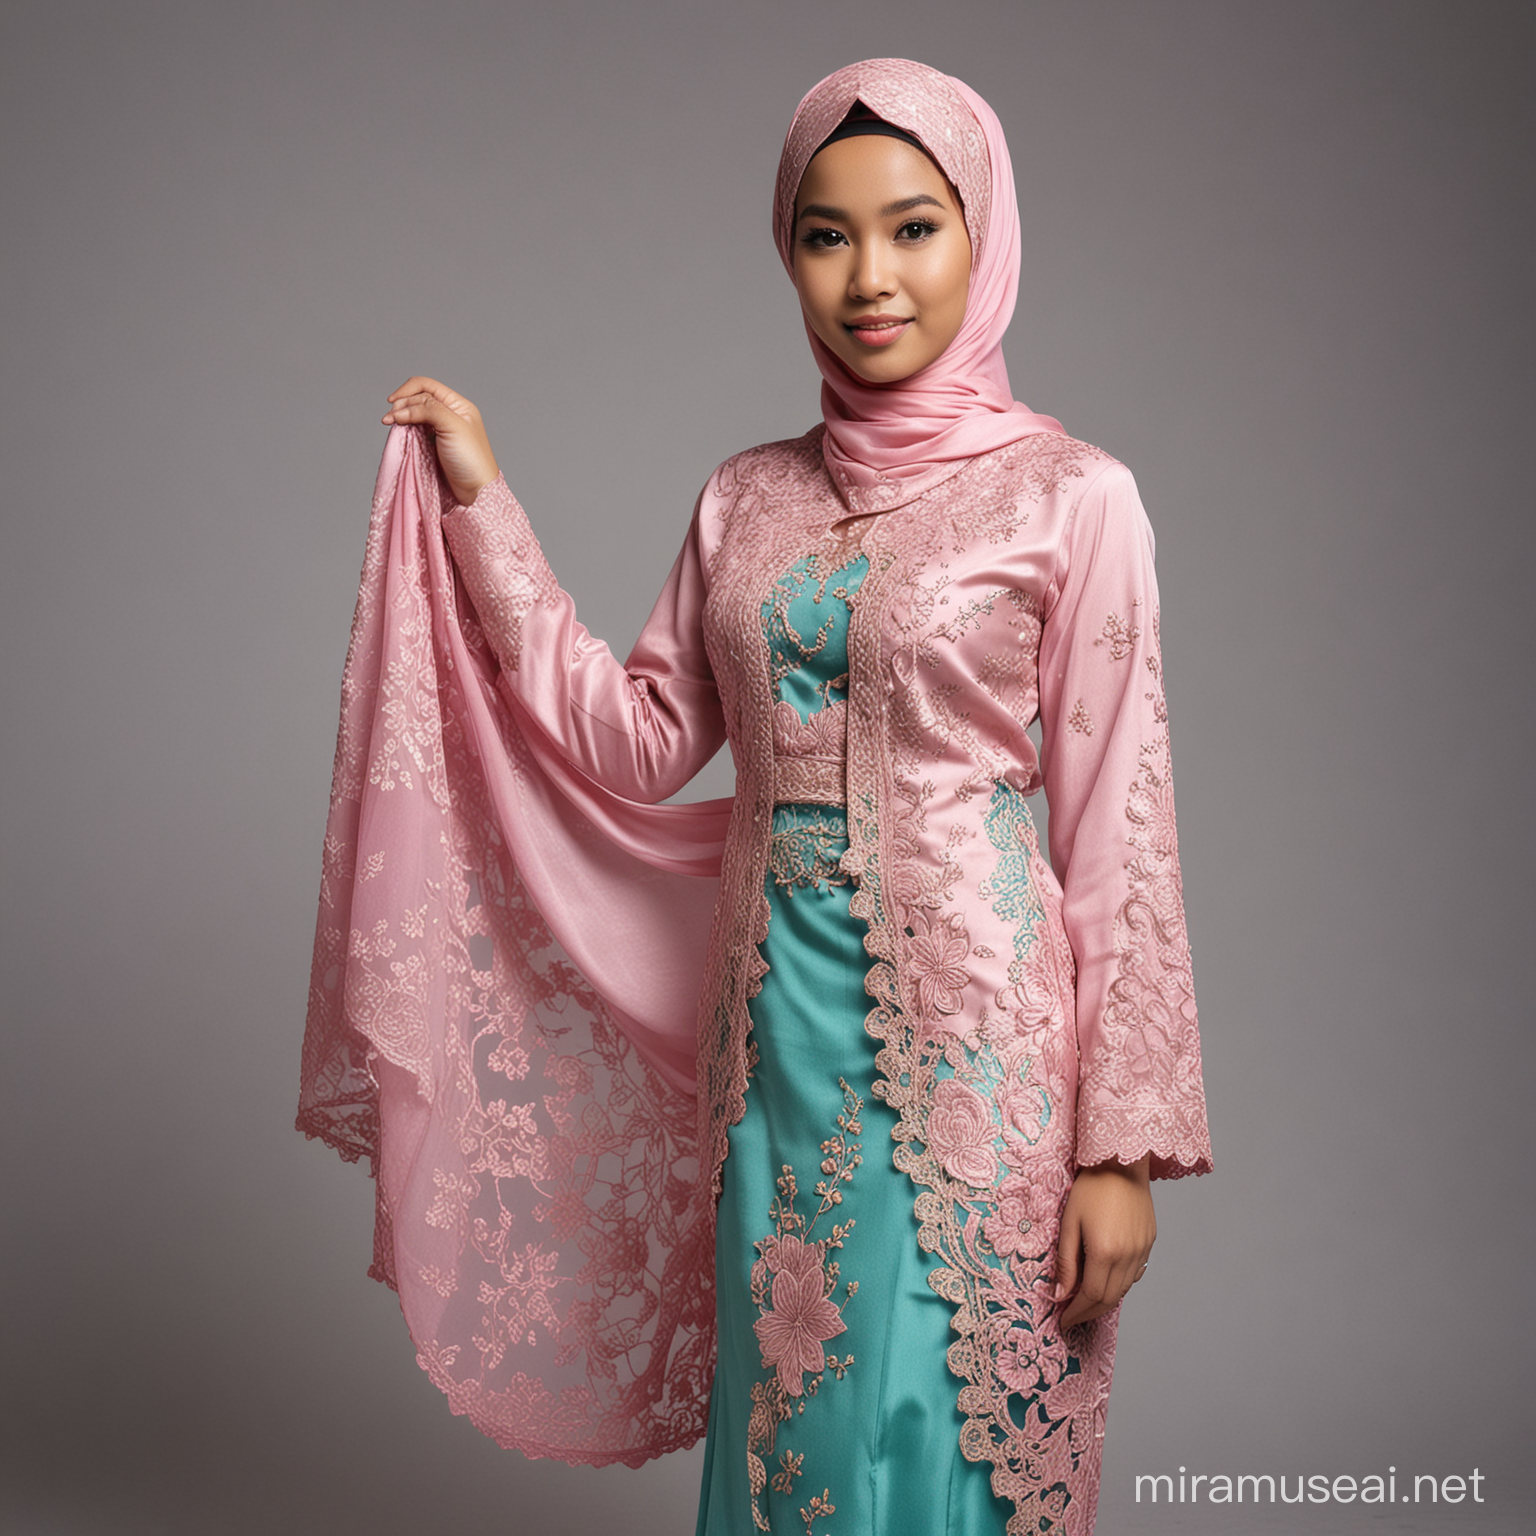 Malay Girl in Elegant Traditional Kebaya Dress with Hijab